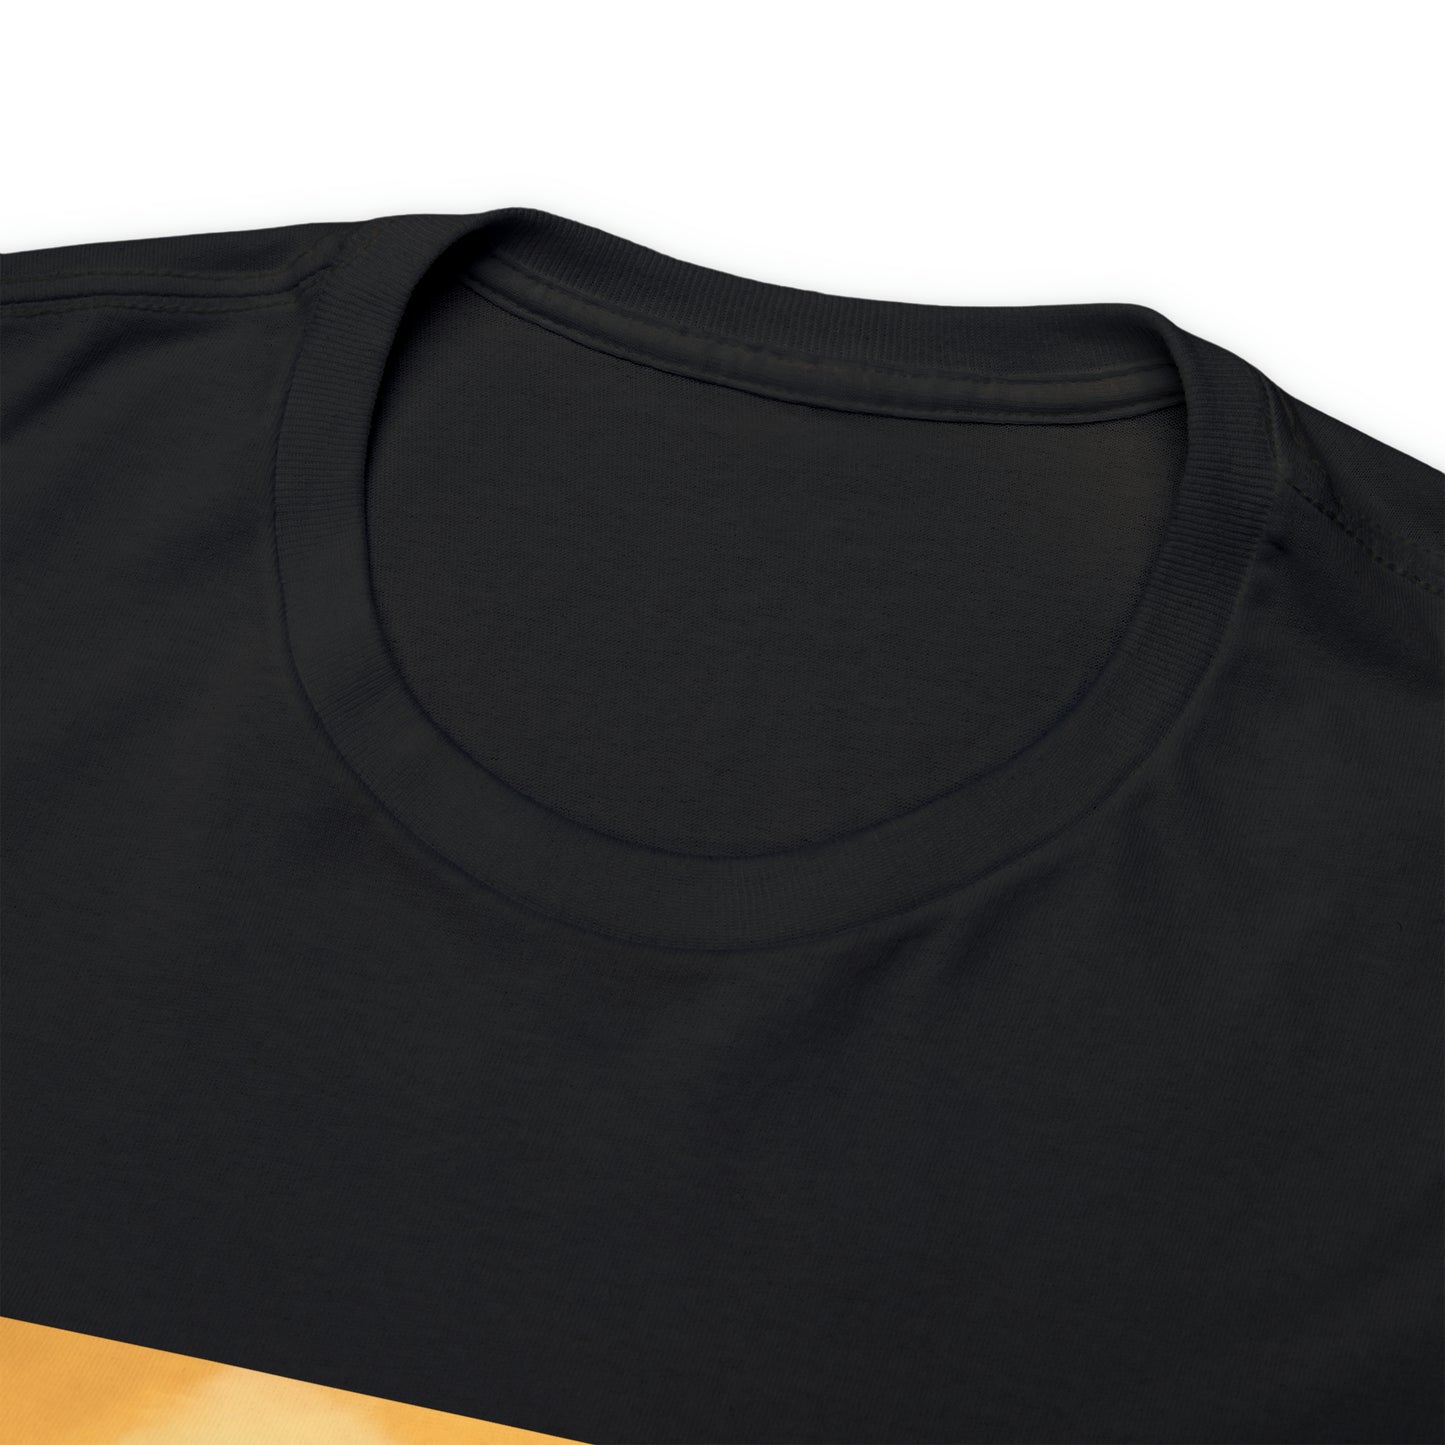 Steve Irwin - black shirt